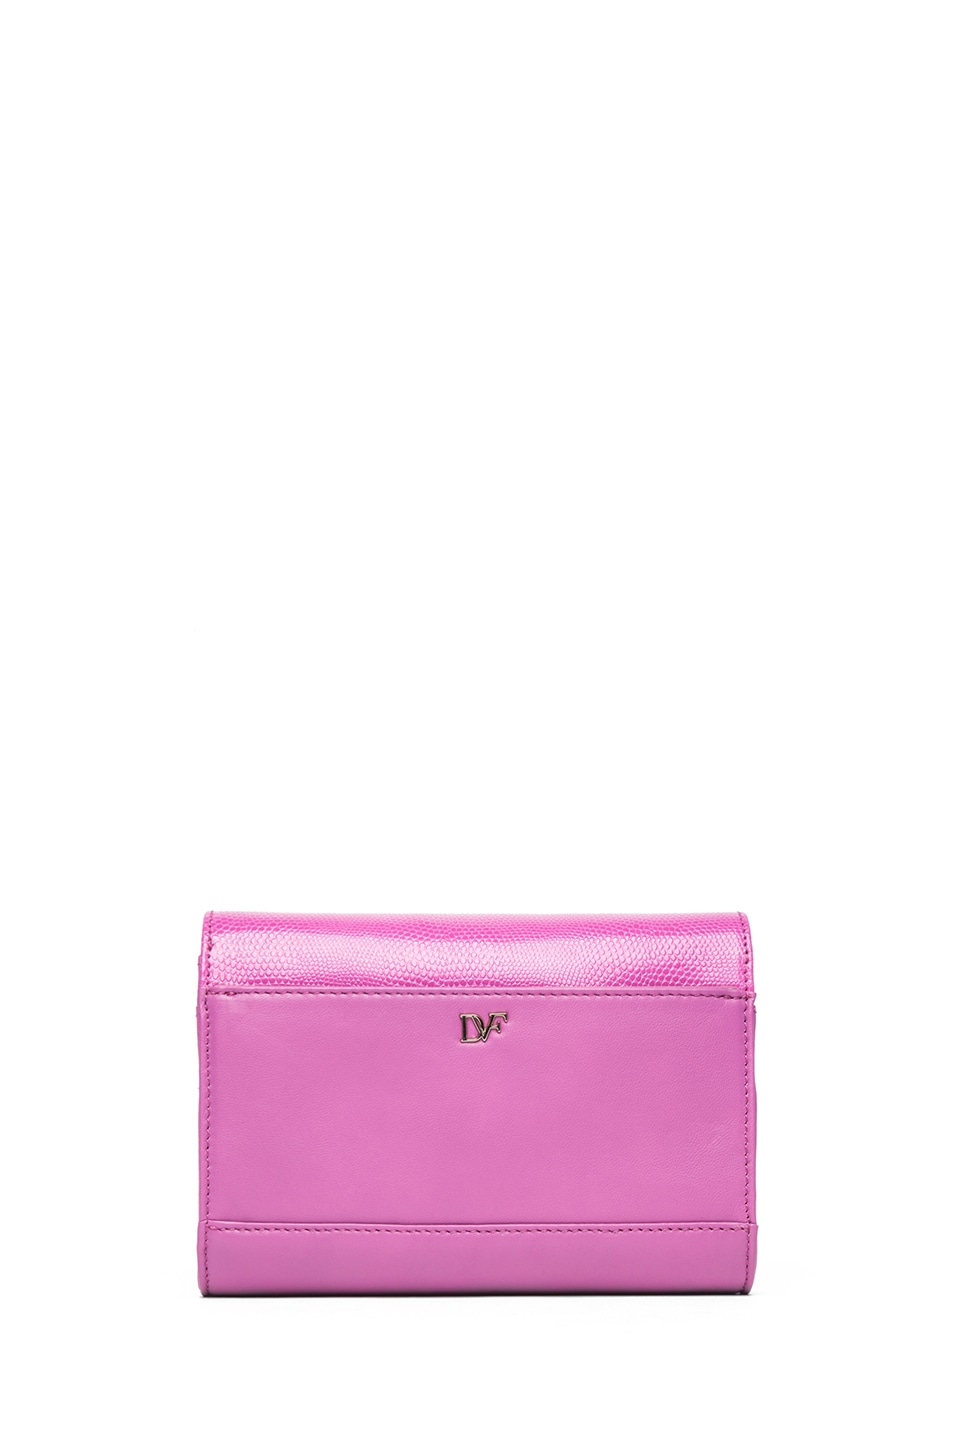 Diane von Furstenberg Mini Lips Embossed Lizard Leather Bag in Pink ...